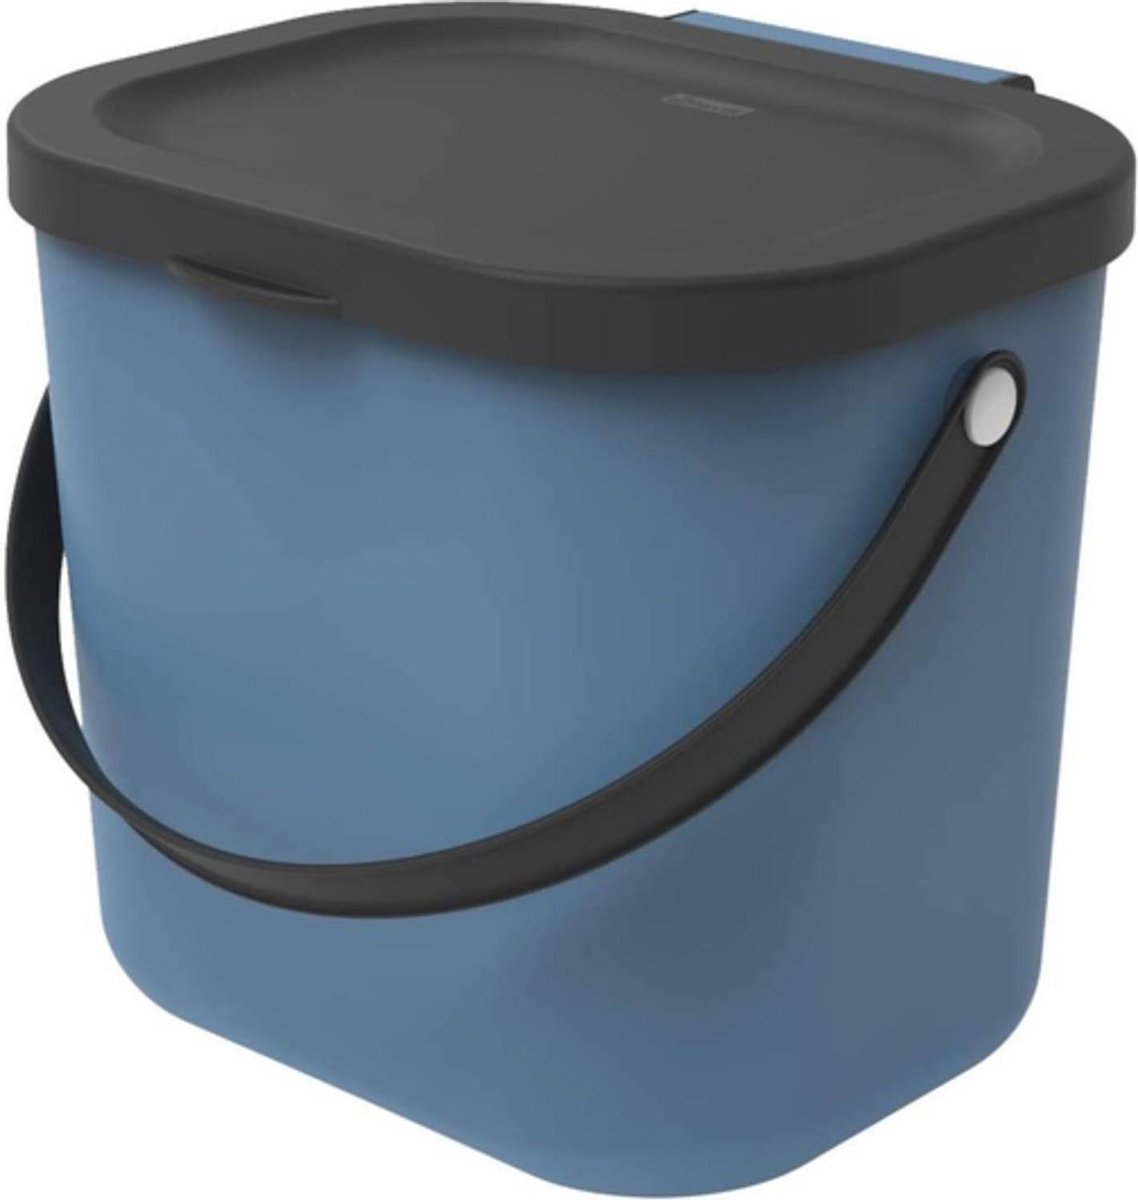 Rotho Albula Afvalbak - 6 Liter - - Blauw